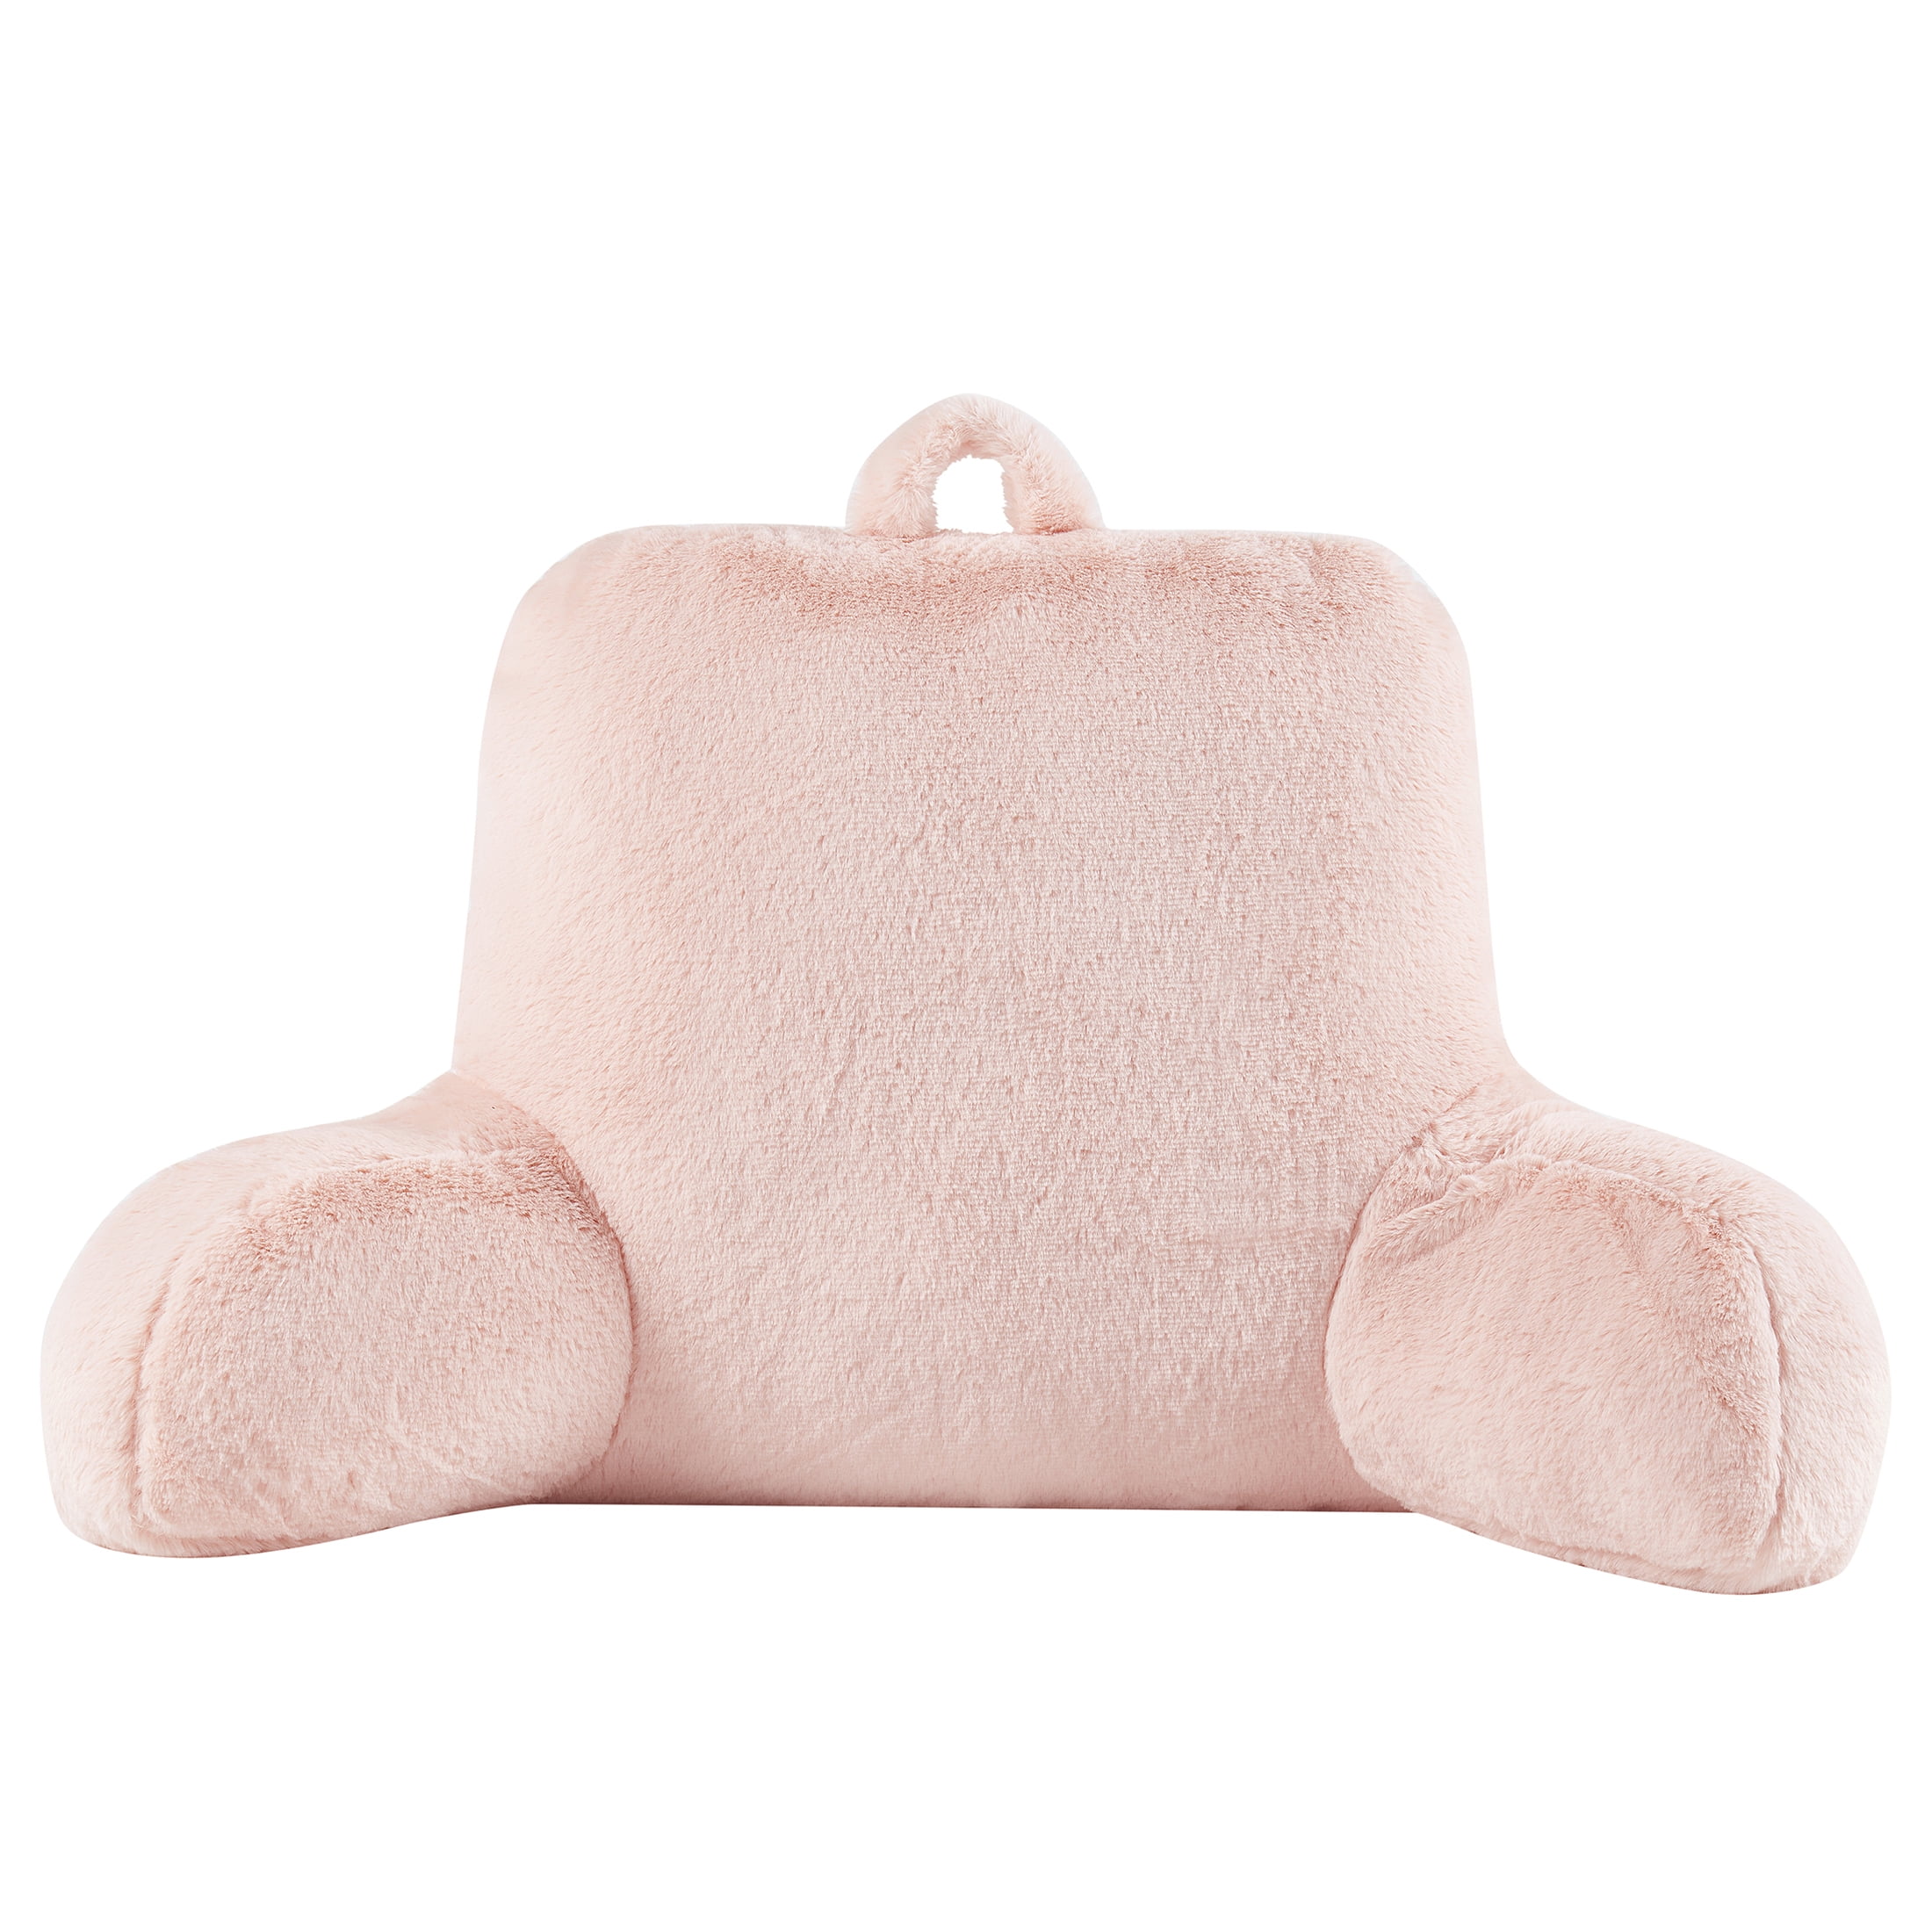 Mainstays Faux Fur Plush Bedrest Pillow, Specialty Size, Peach Pink, 1 ...